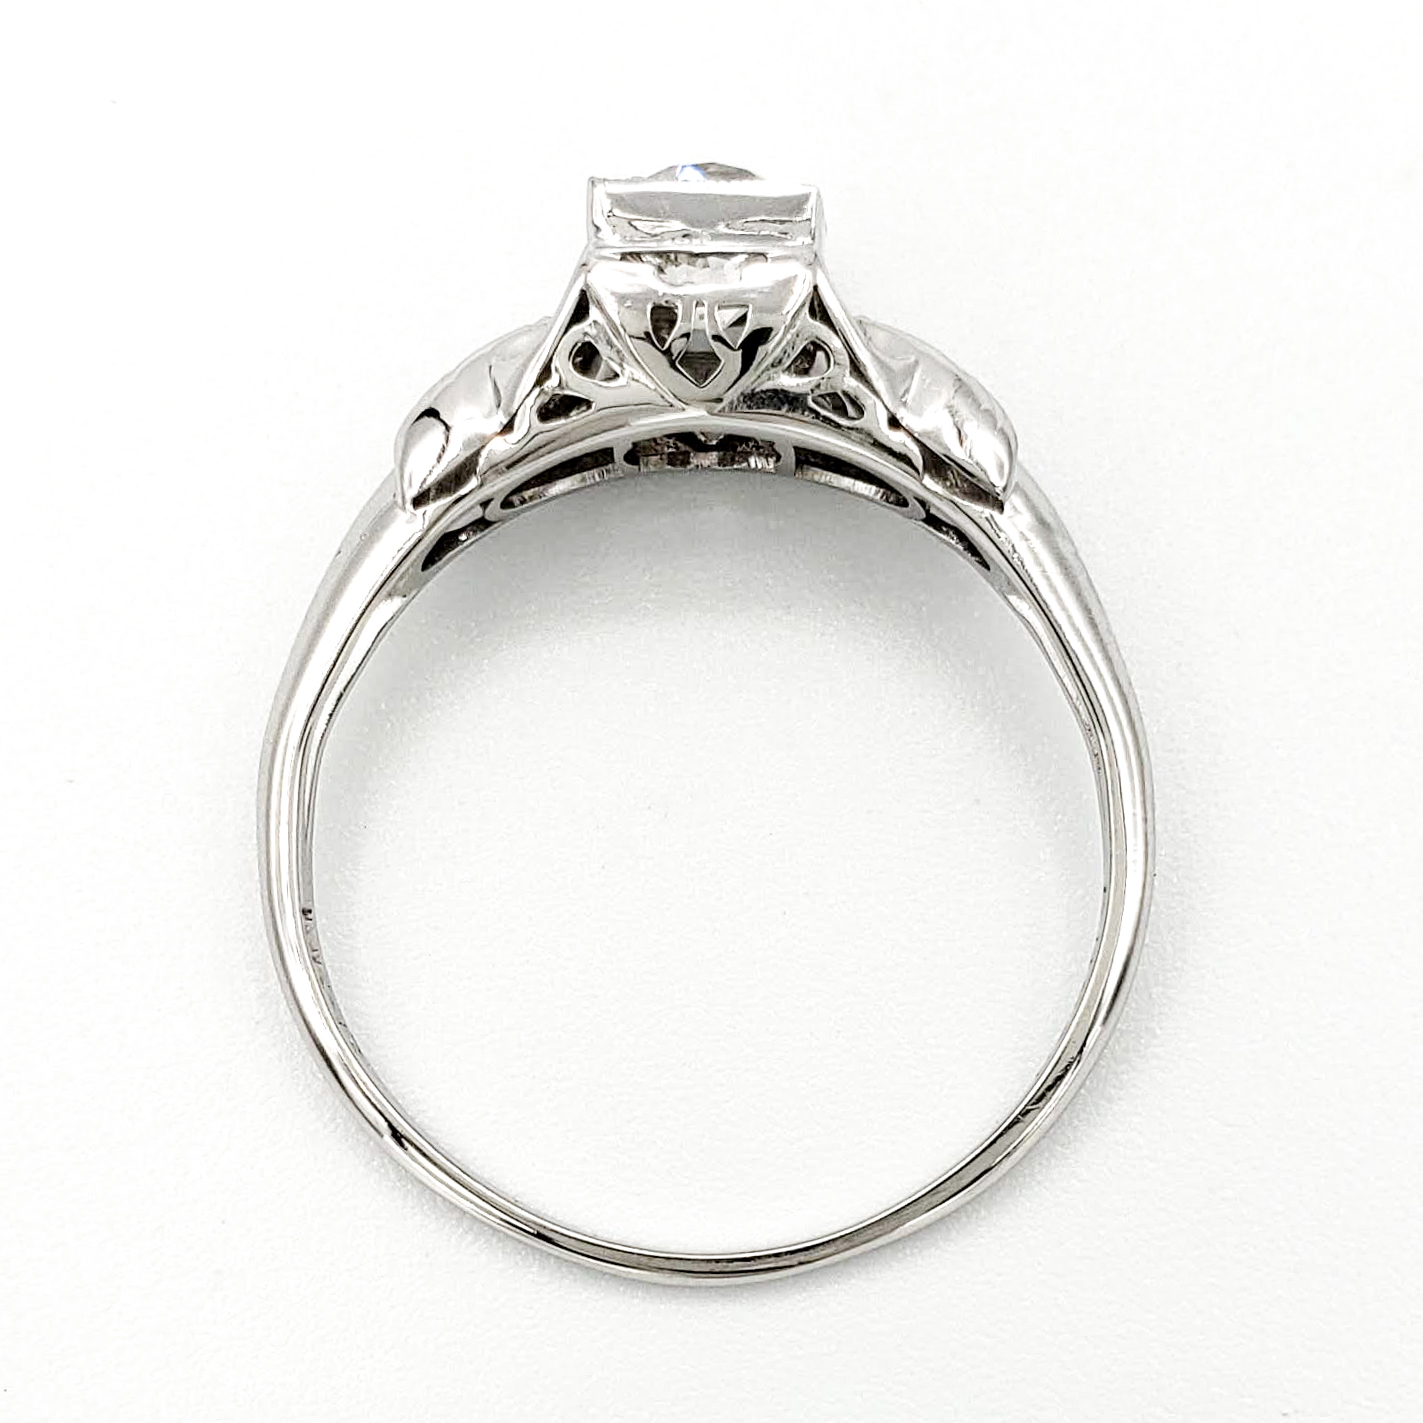 vintage-18-karat-gold-engagement-ring-with-0-51-carat-old-mine-cut-diamond-egl-h-vs2